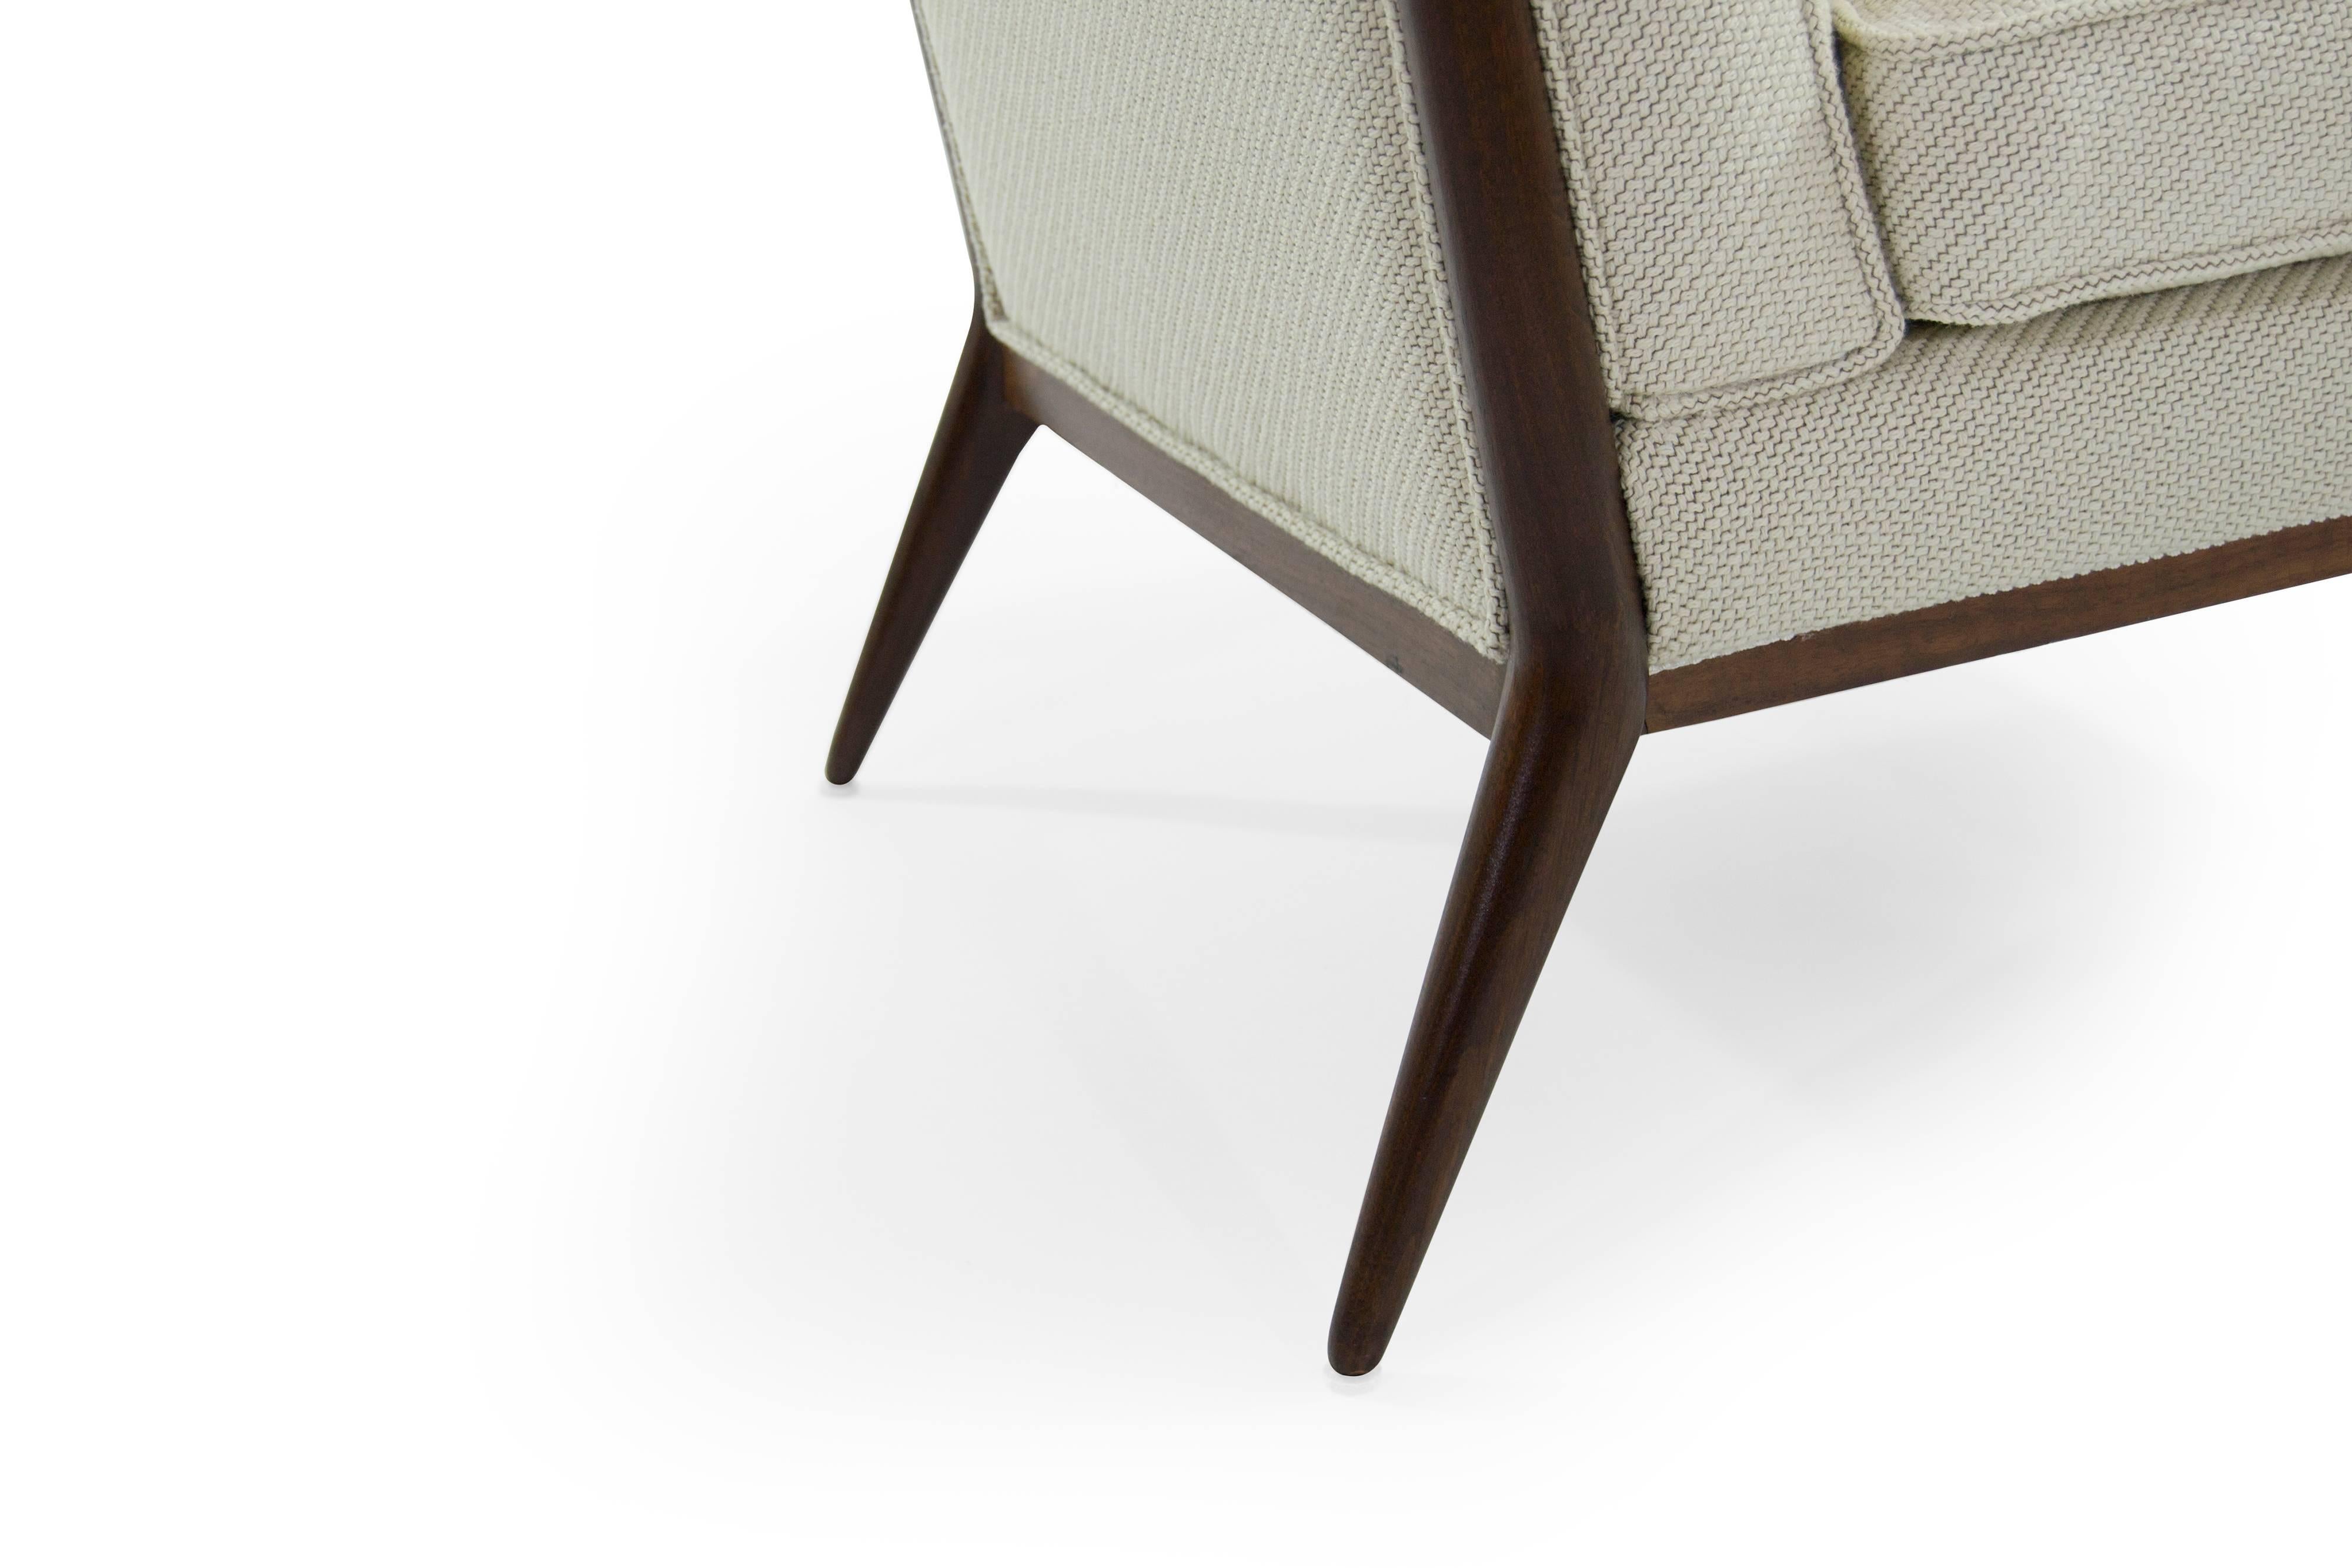 Twill Paul McCobb for Directional Walnut Frame Slipper Chairs, Model 1320